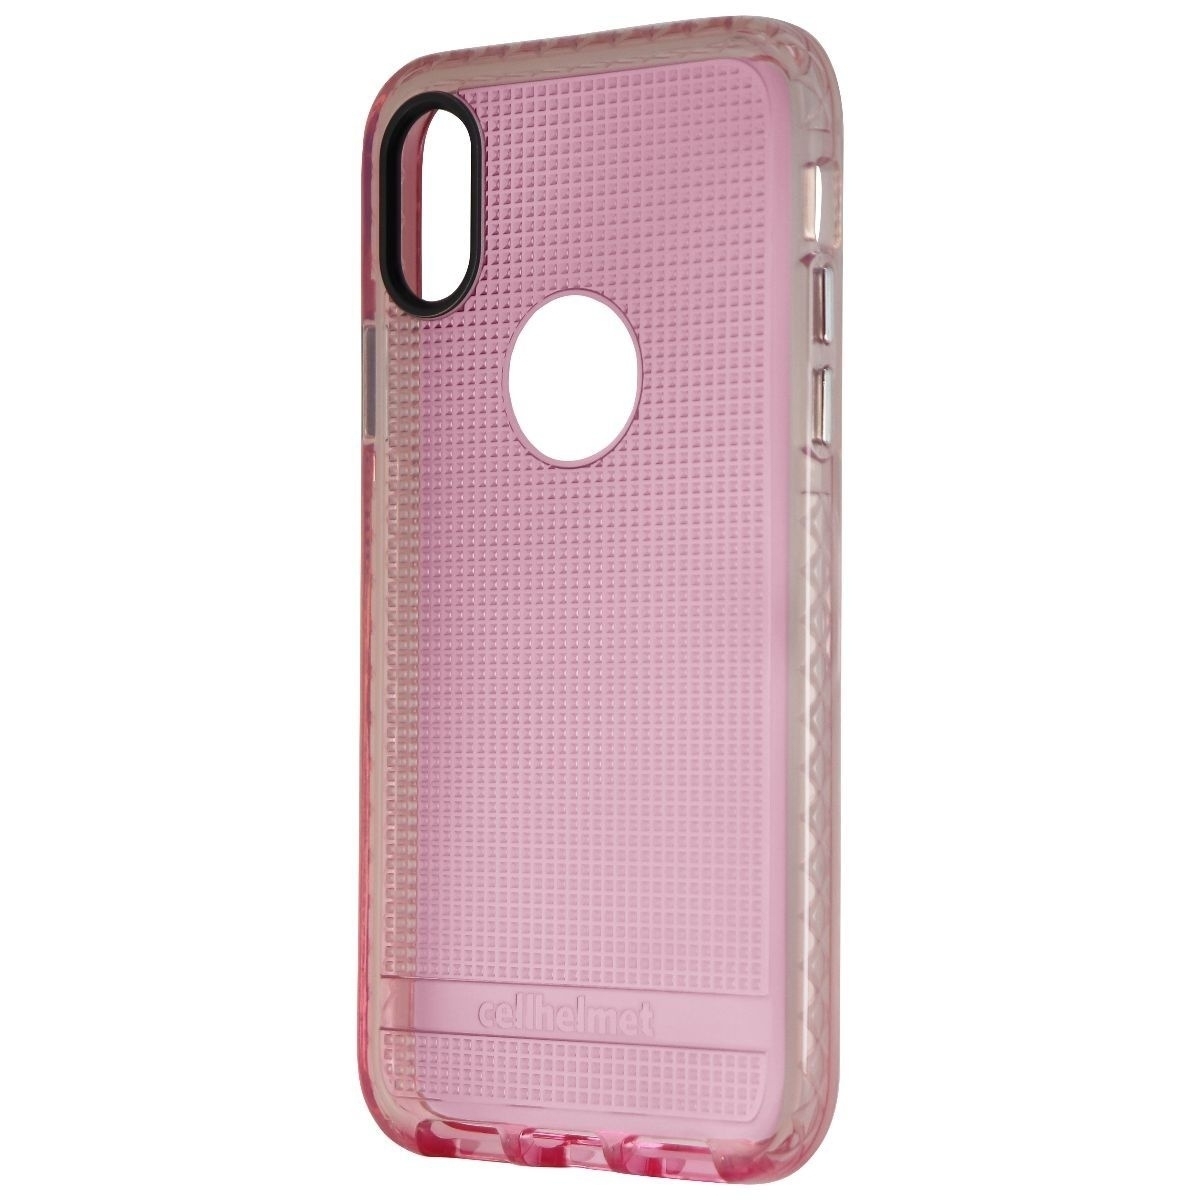 CellHelmet Altitude X Series Case For Apple IPhone XS & IPhone X - Pink